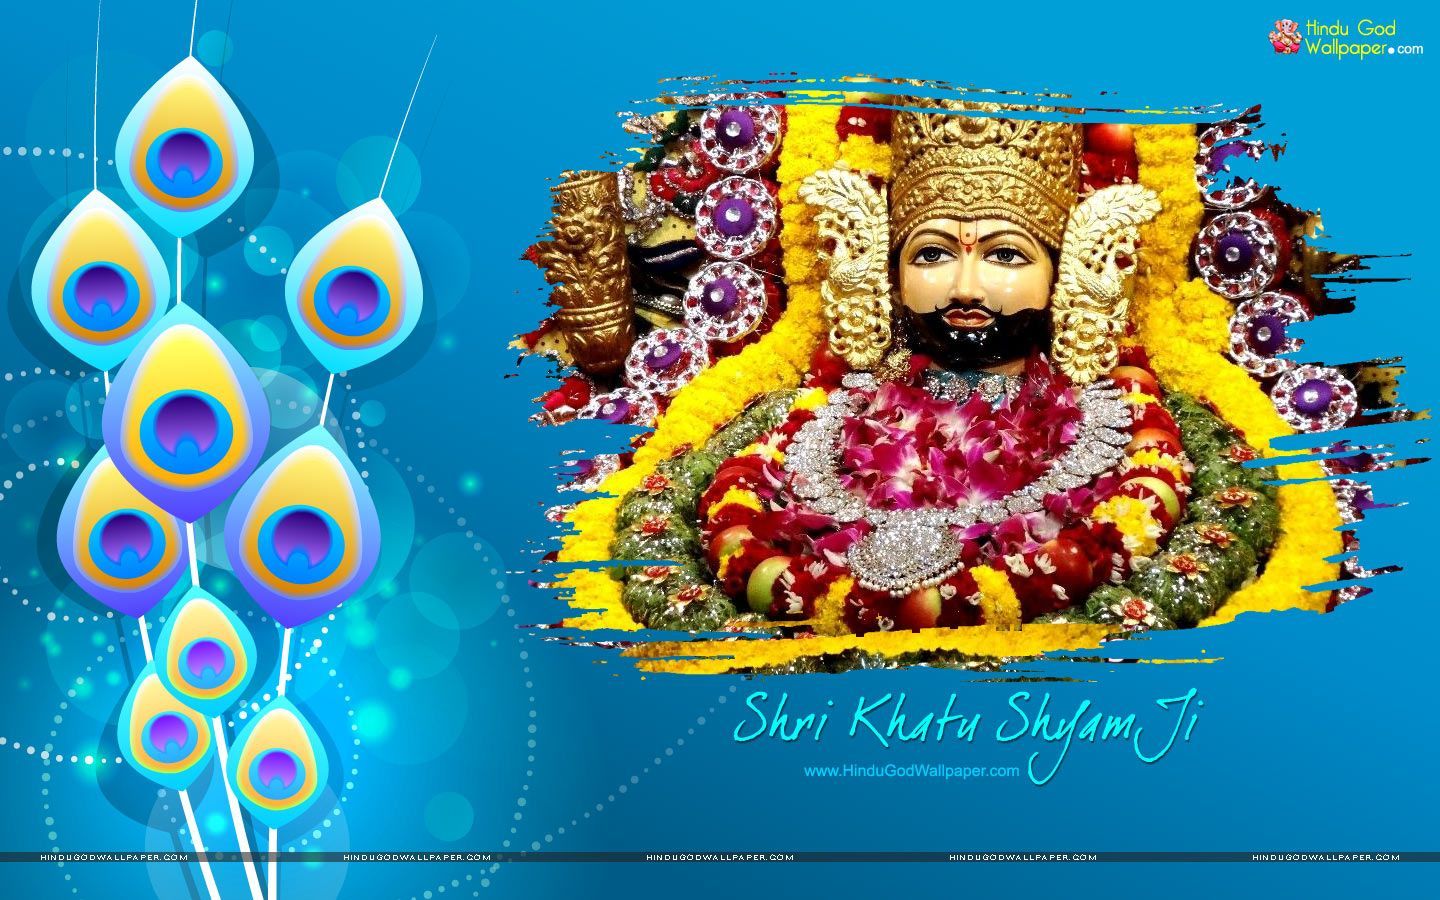 Khatu Shyam Wallpaper for PC Desktop Download. Wallpaper pc, Wallpaper, Happy fathers day wallpaper